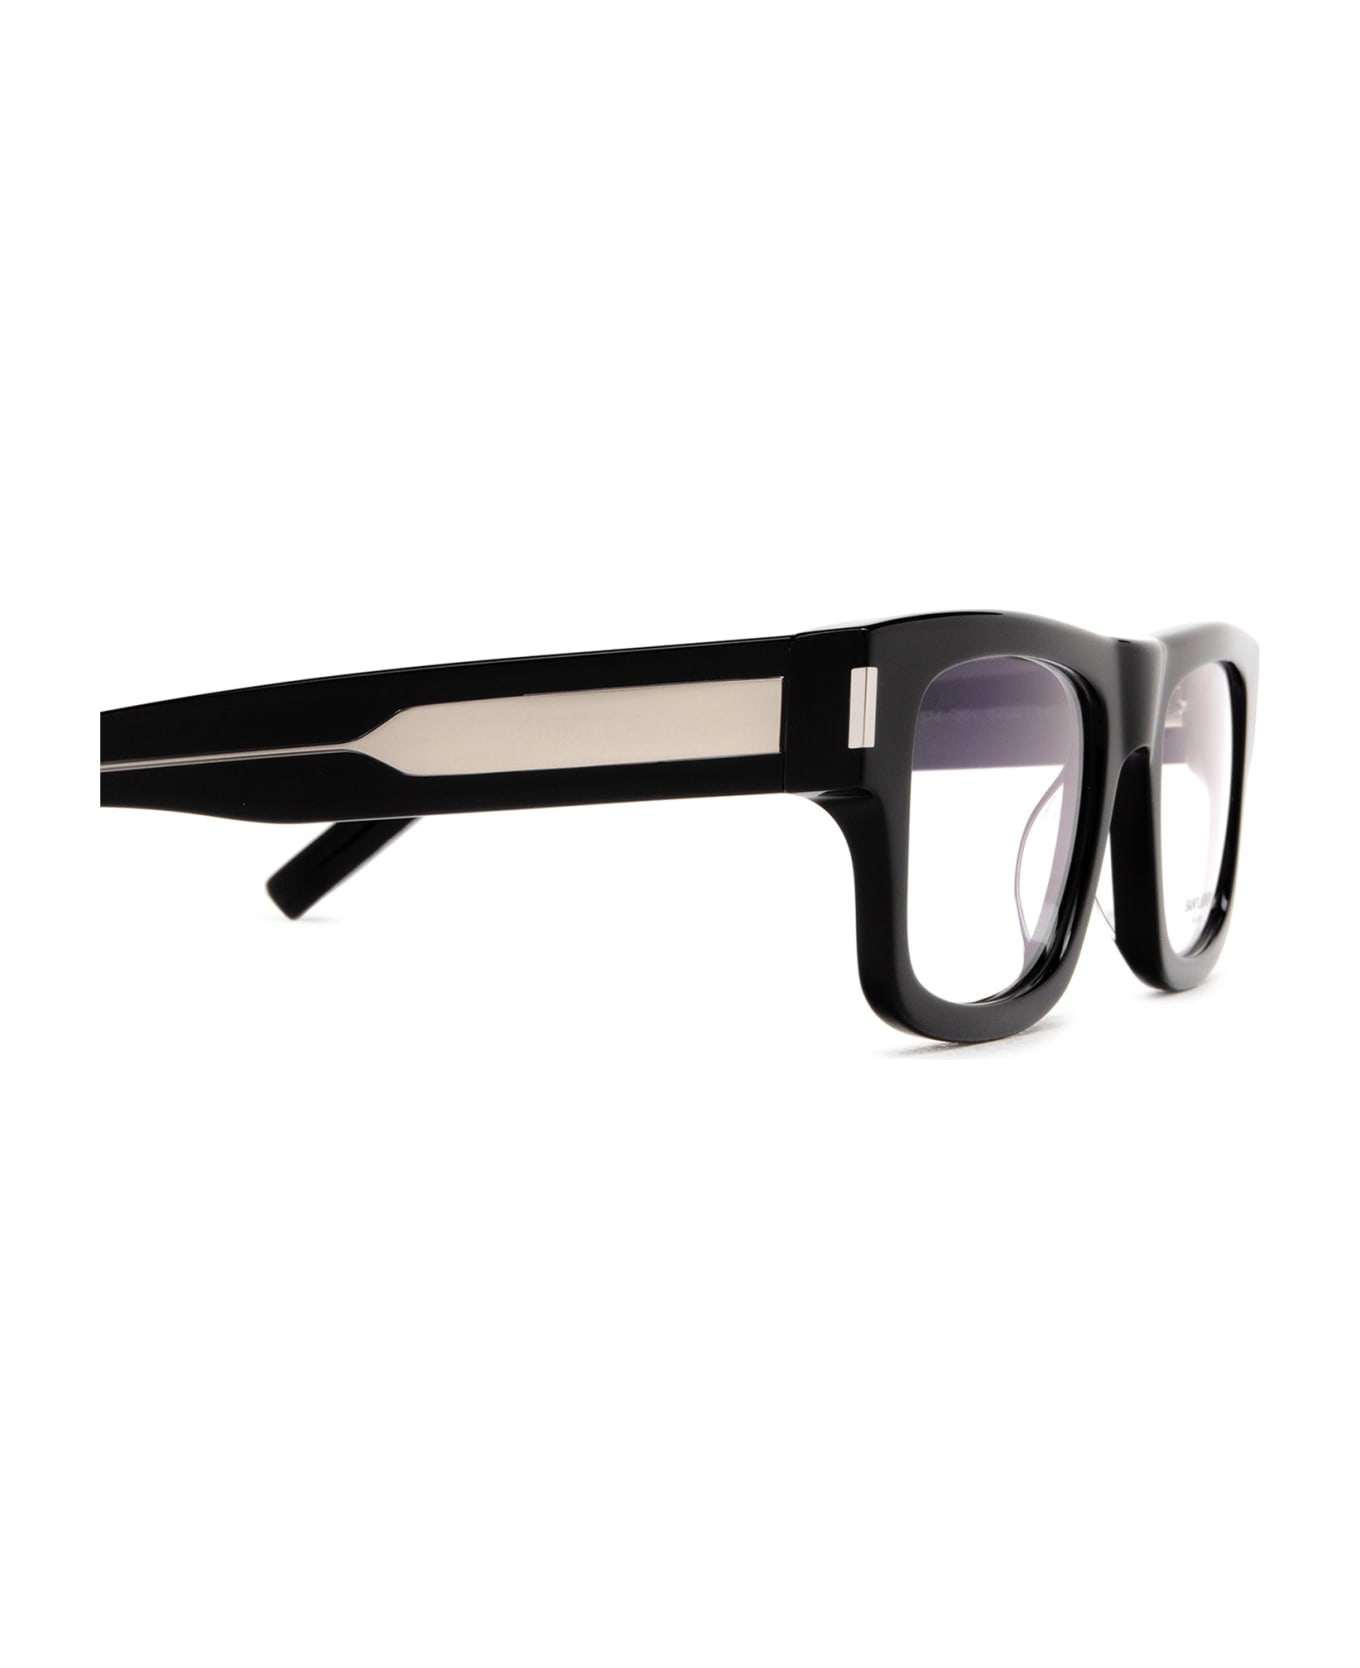 Saint Laurent Eyewear Sl 574 Black Glasses - Black